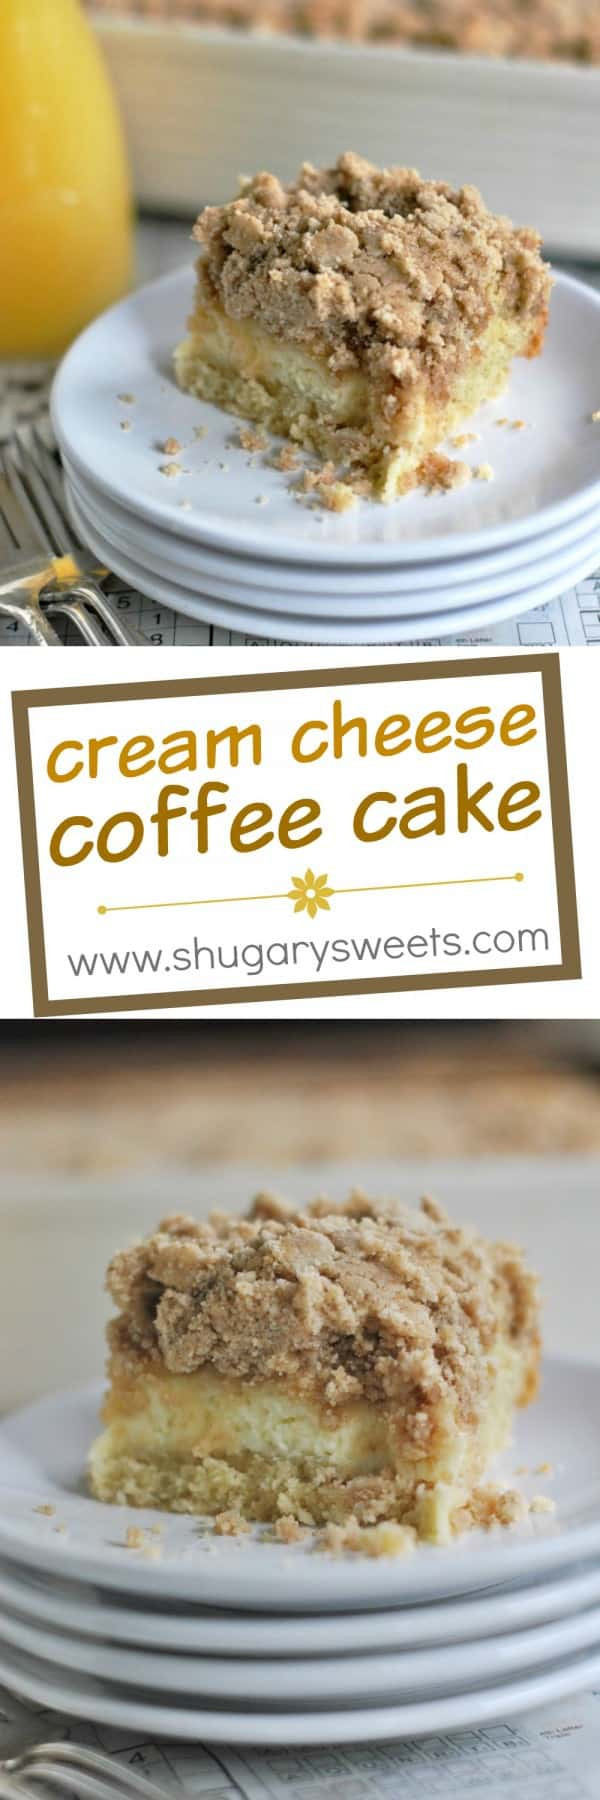 Cream Cheese Coffee Cake Recipe
 Cream Cheese Coffee Cake with Cinnamon Streusel